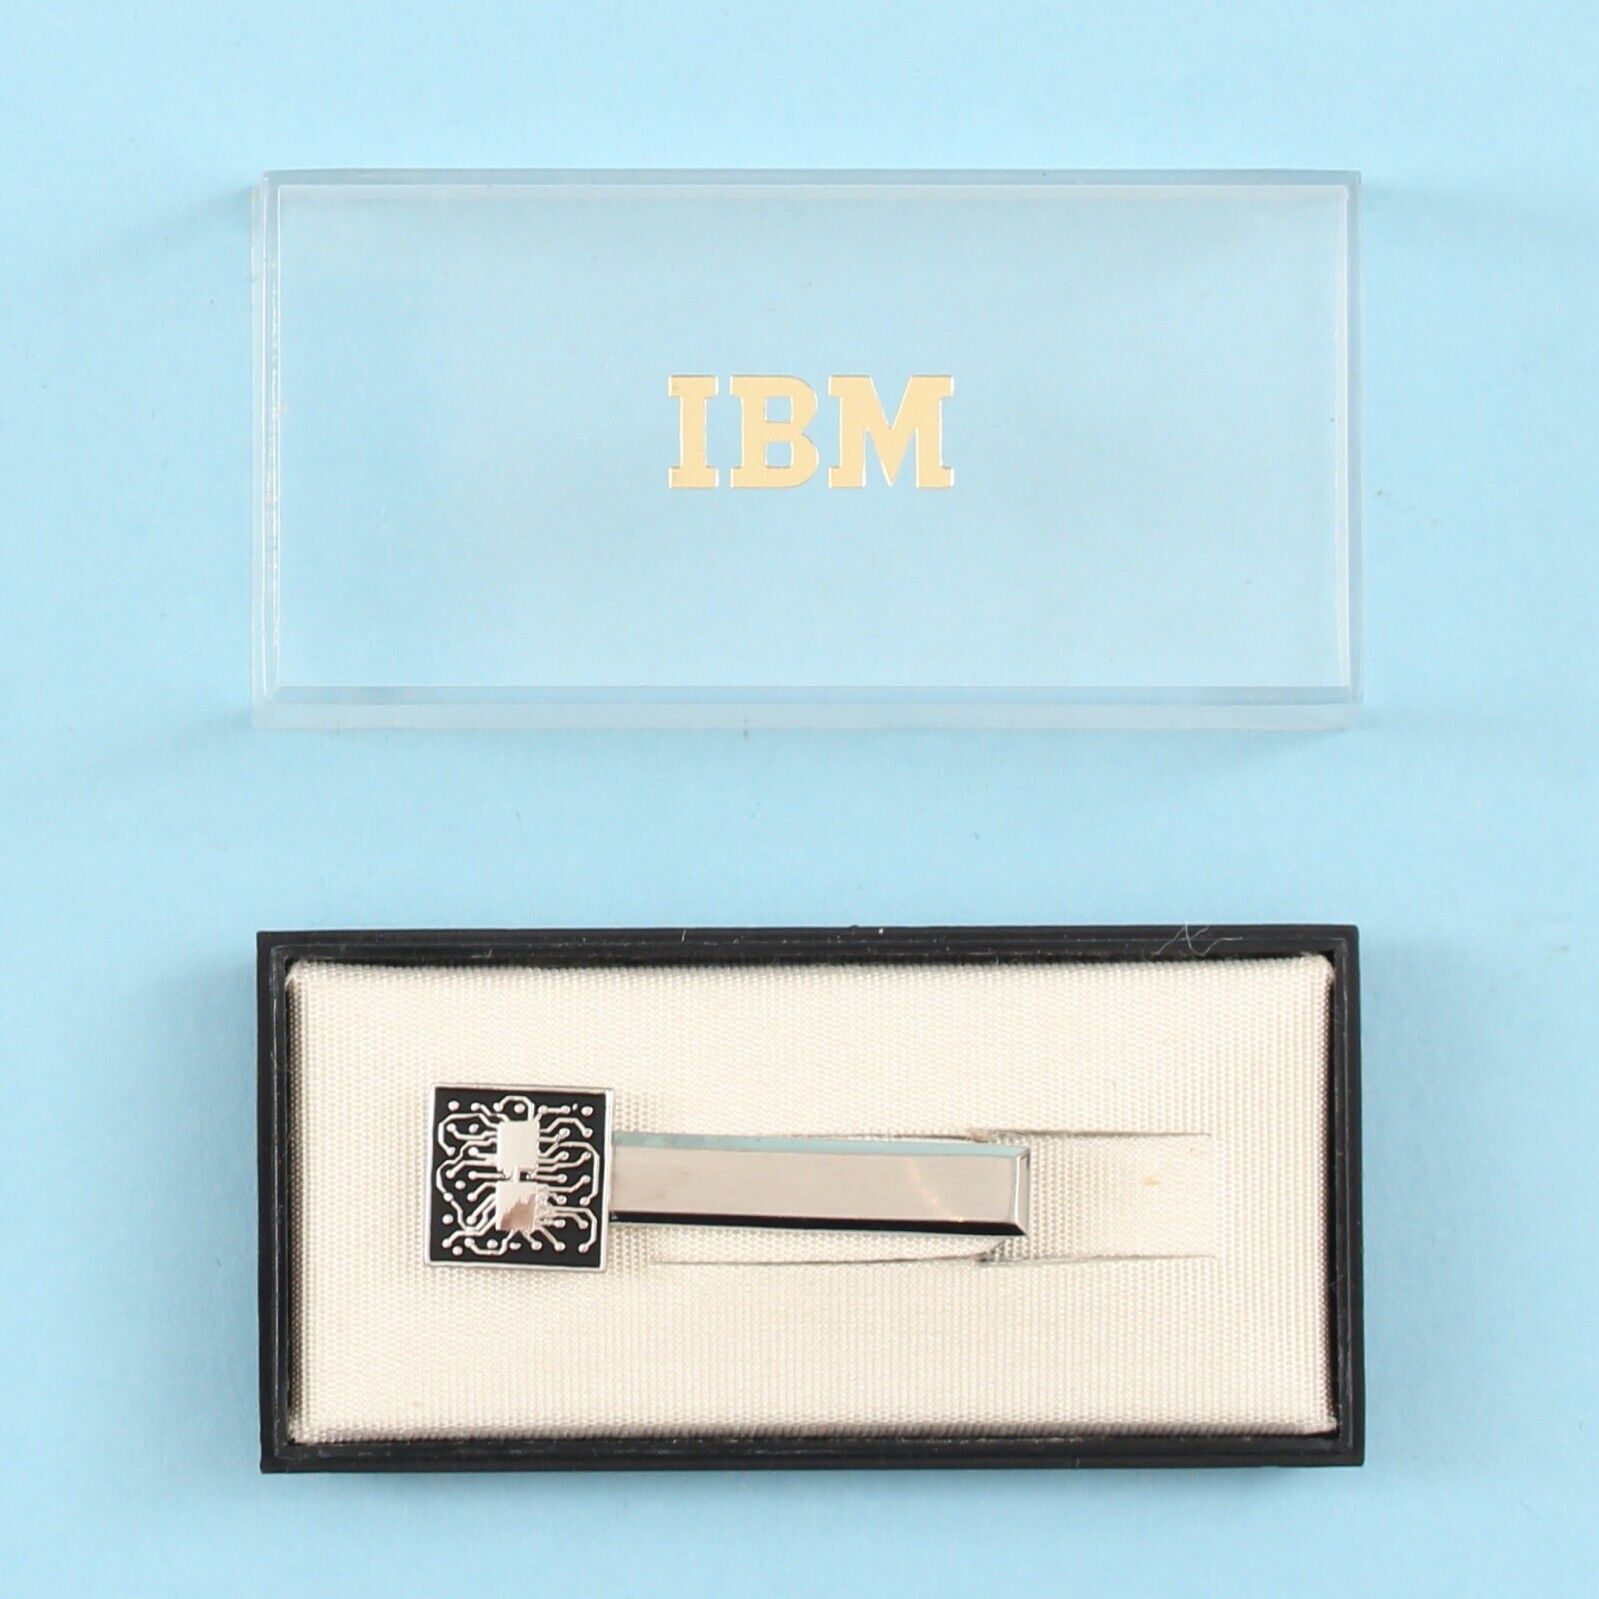 Vintage 1970’s IBM Computer Enamel Circuit / Chip Tie Pin with Original Box